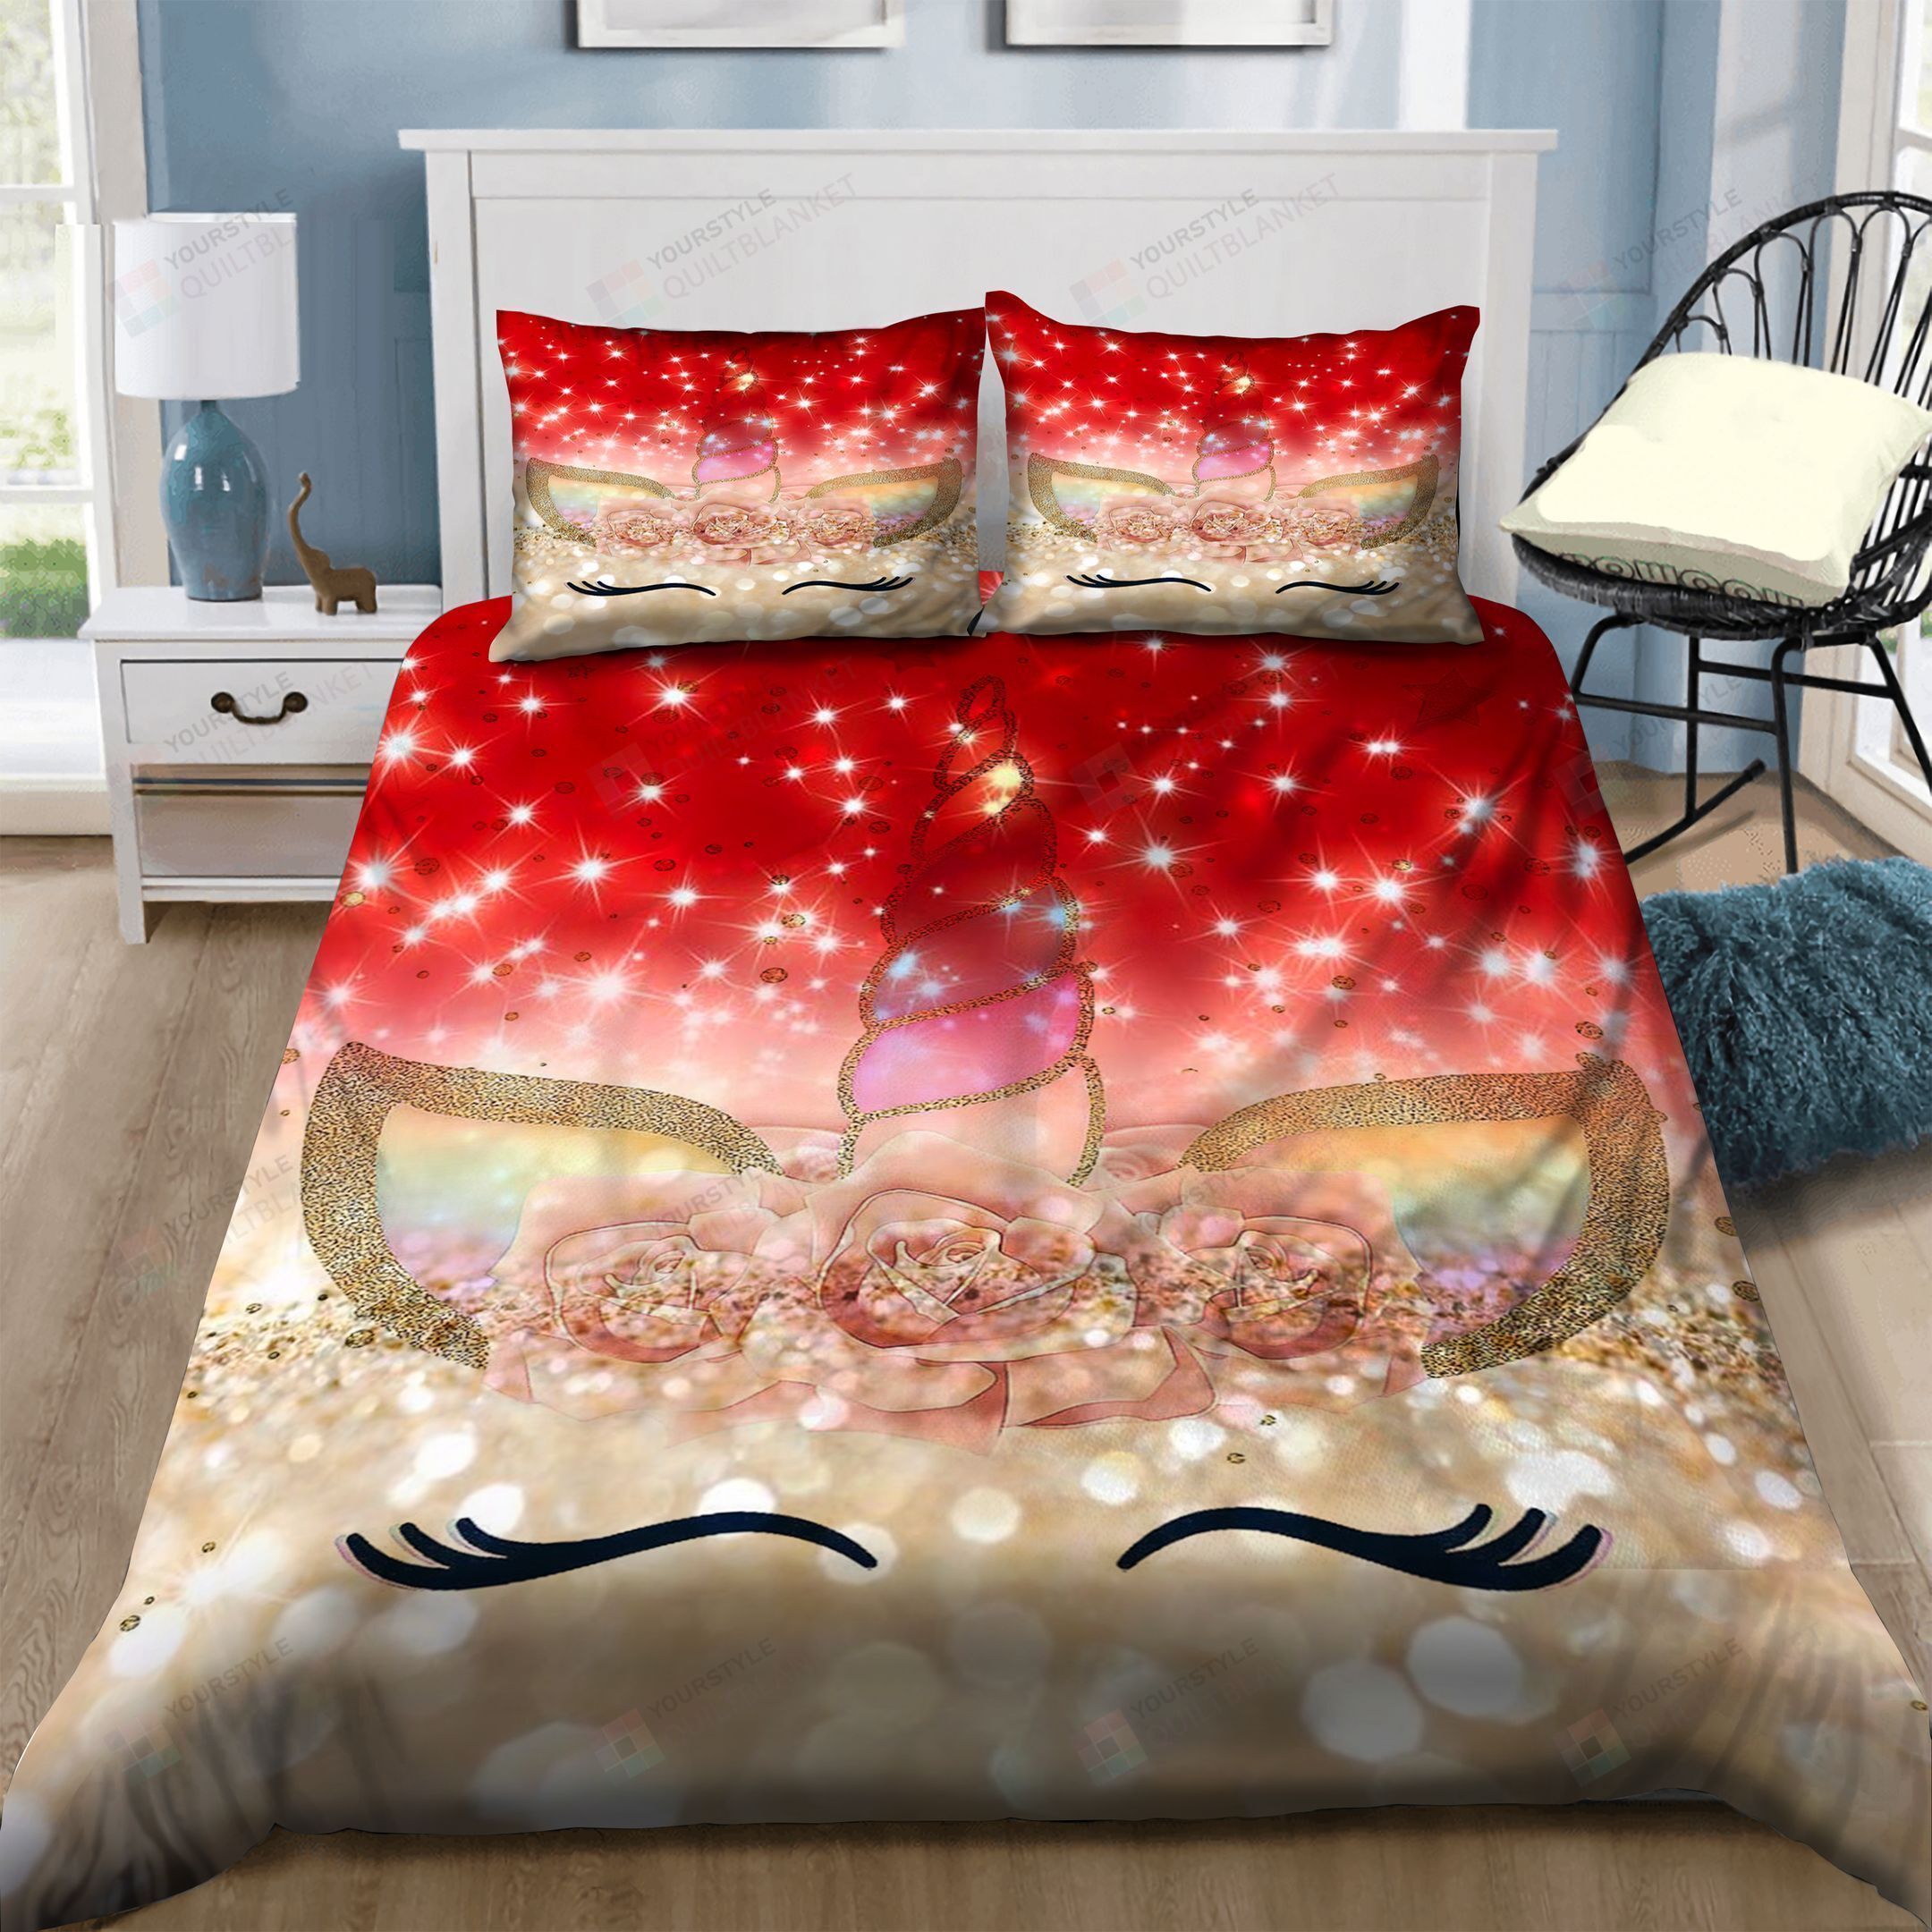 Unicorn Cotton Bed Sheets Spread Comforter Duvet Cover Bedding Sets